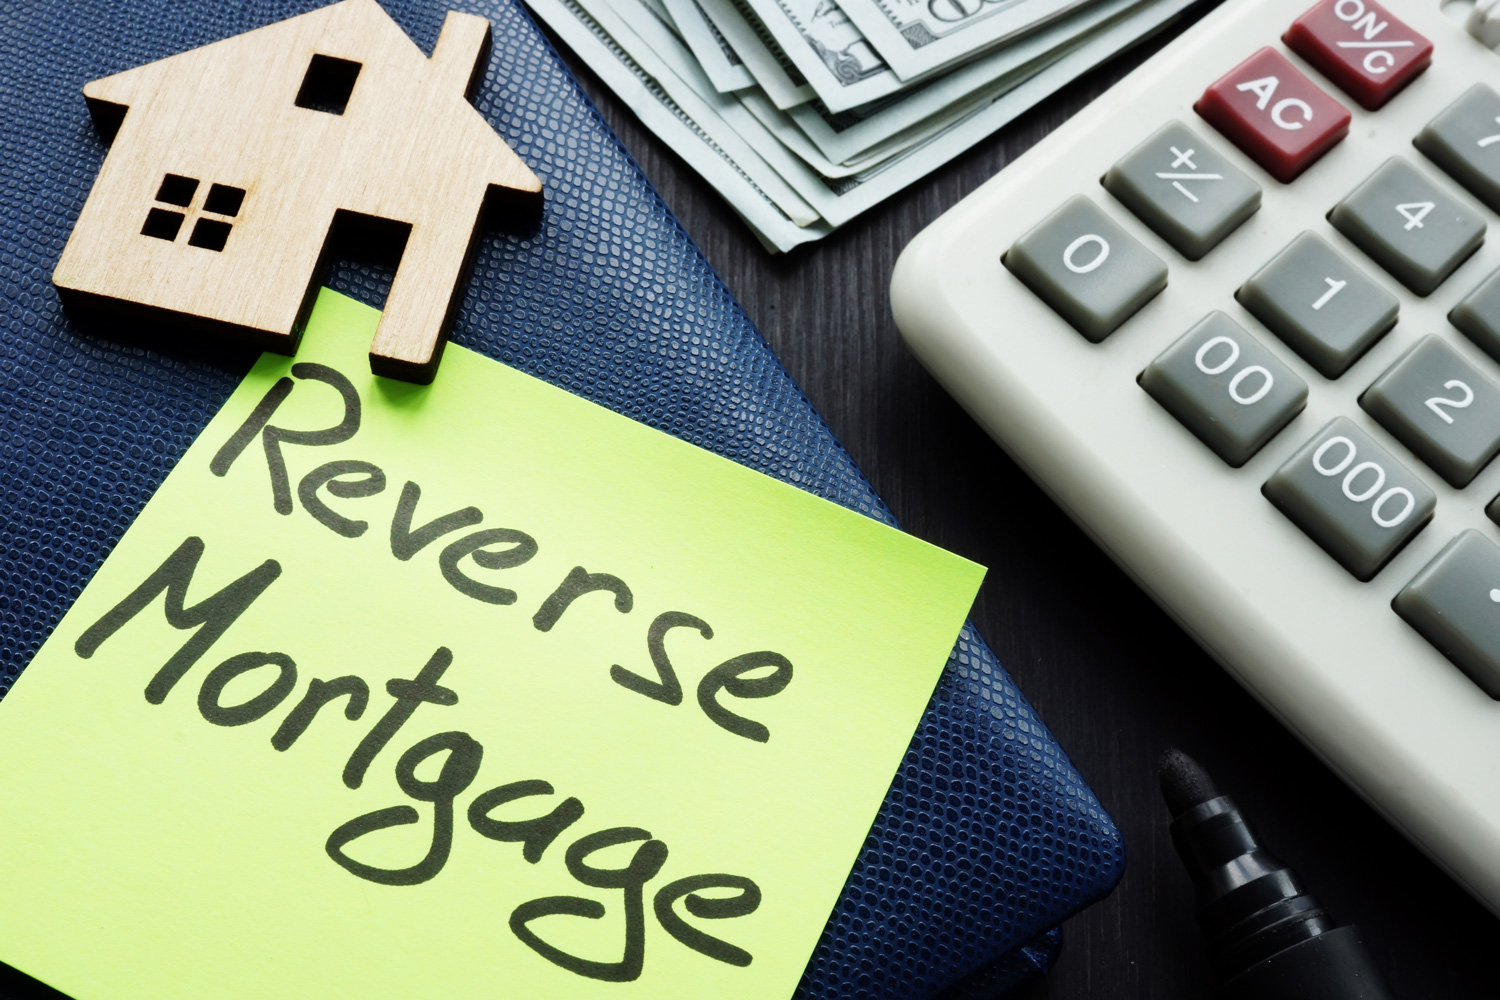 Reverse-Mortgage